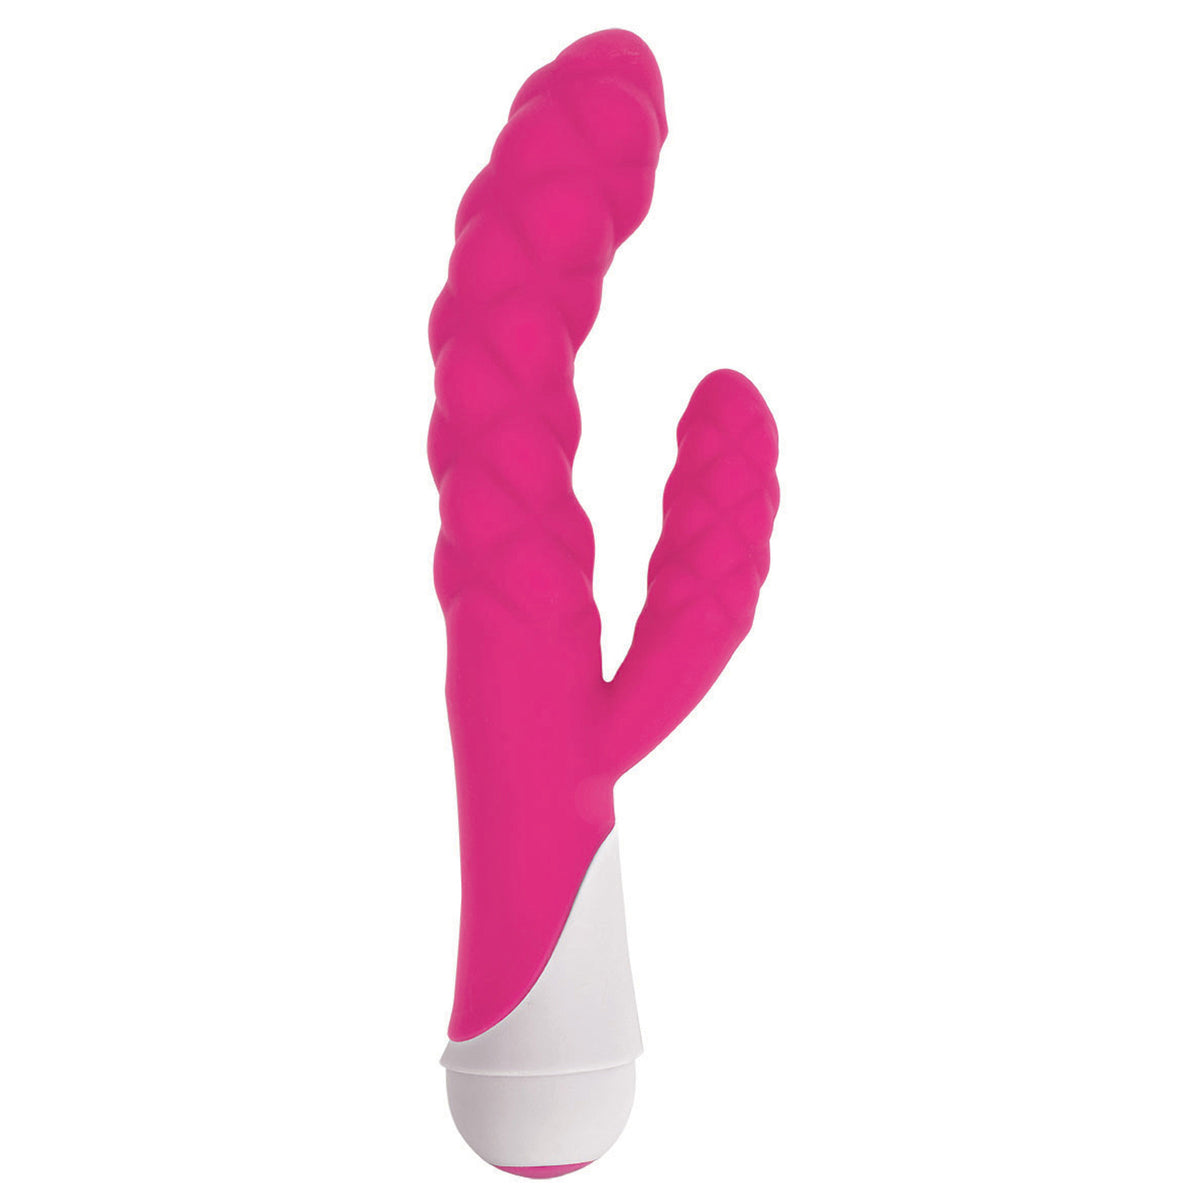 Ellen 20x Silicone Vibrator – Pink